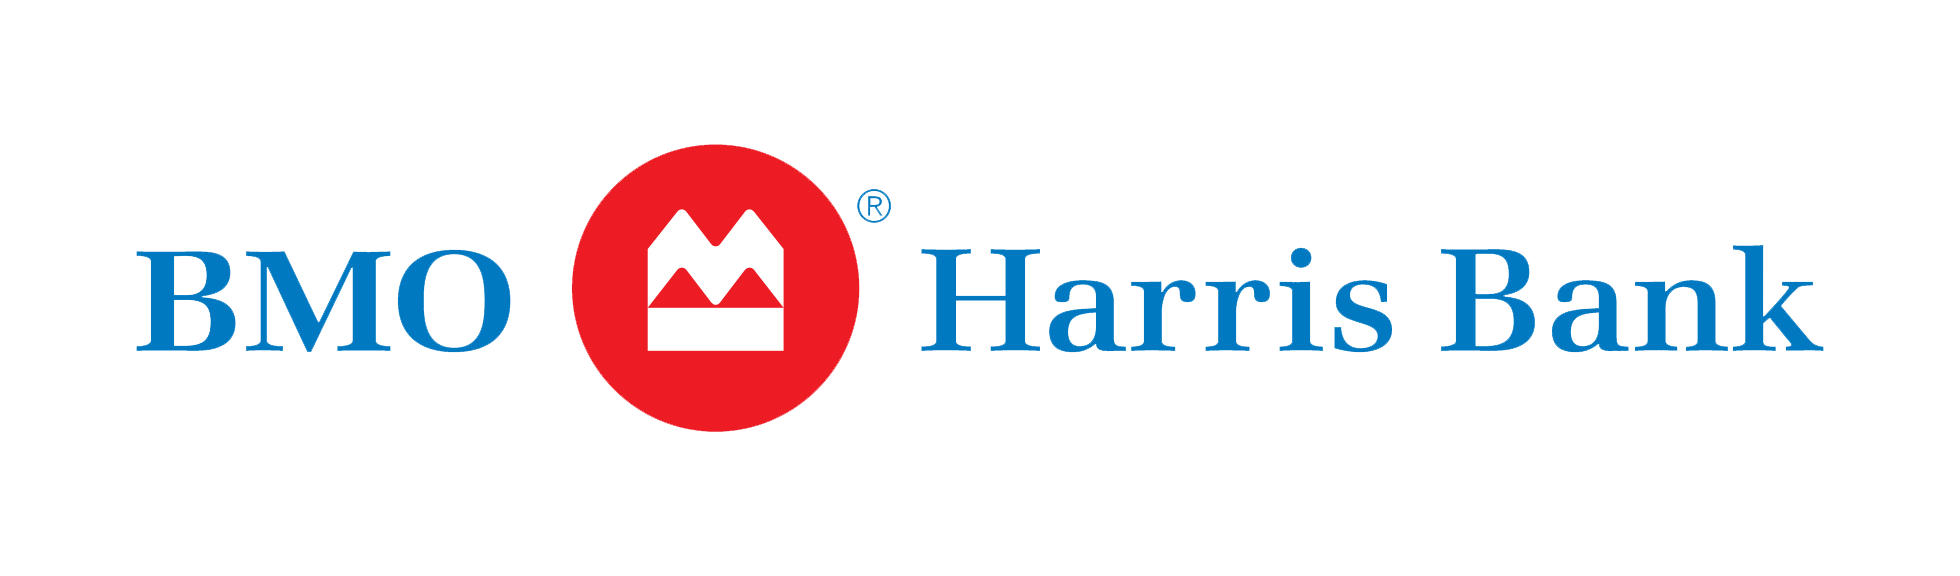 bmo-harris-logo-1